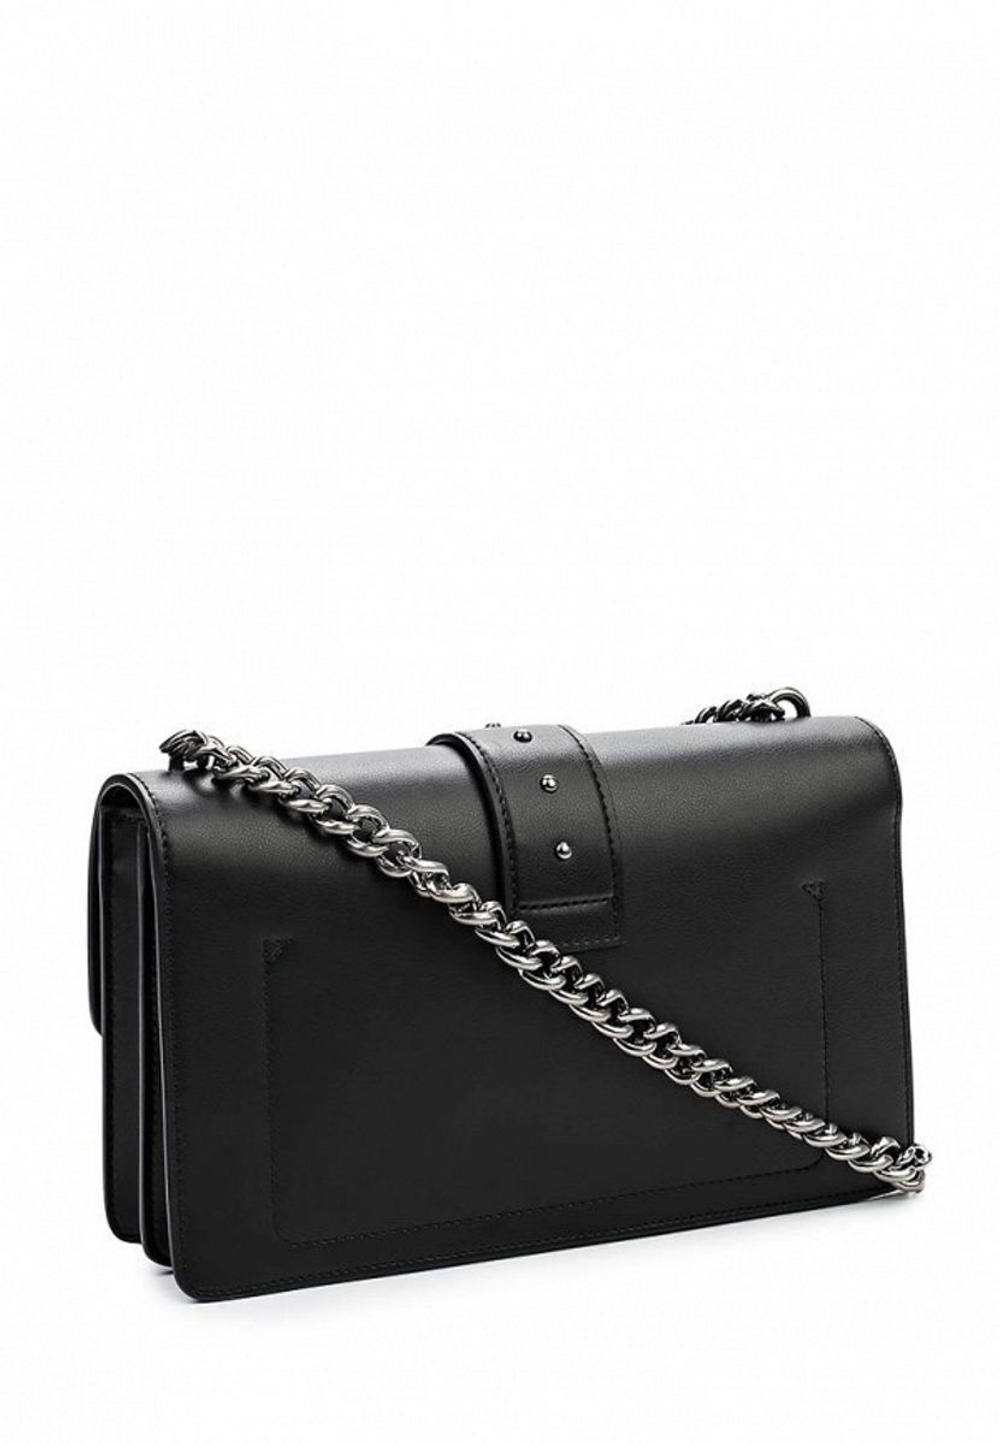 CLASSIC LOVE BAG SIMPLY - black/silver